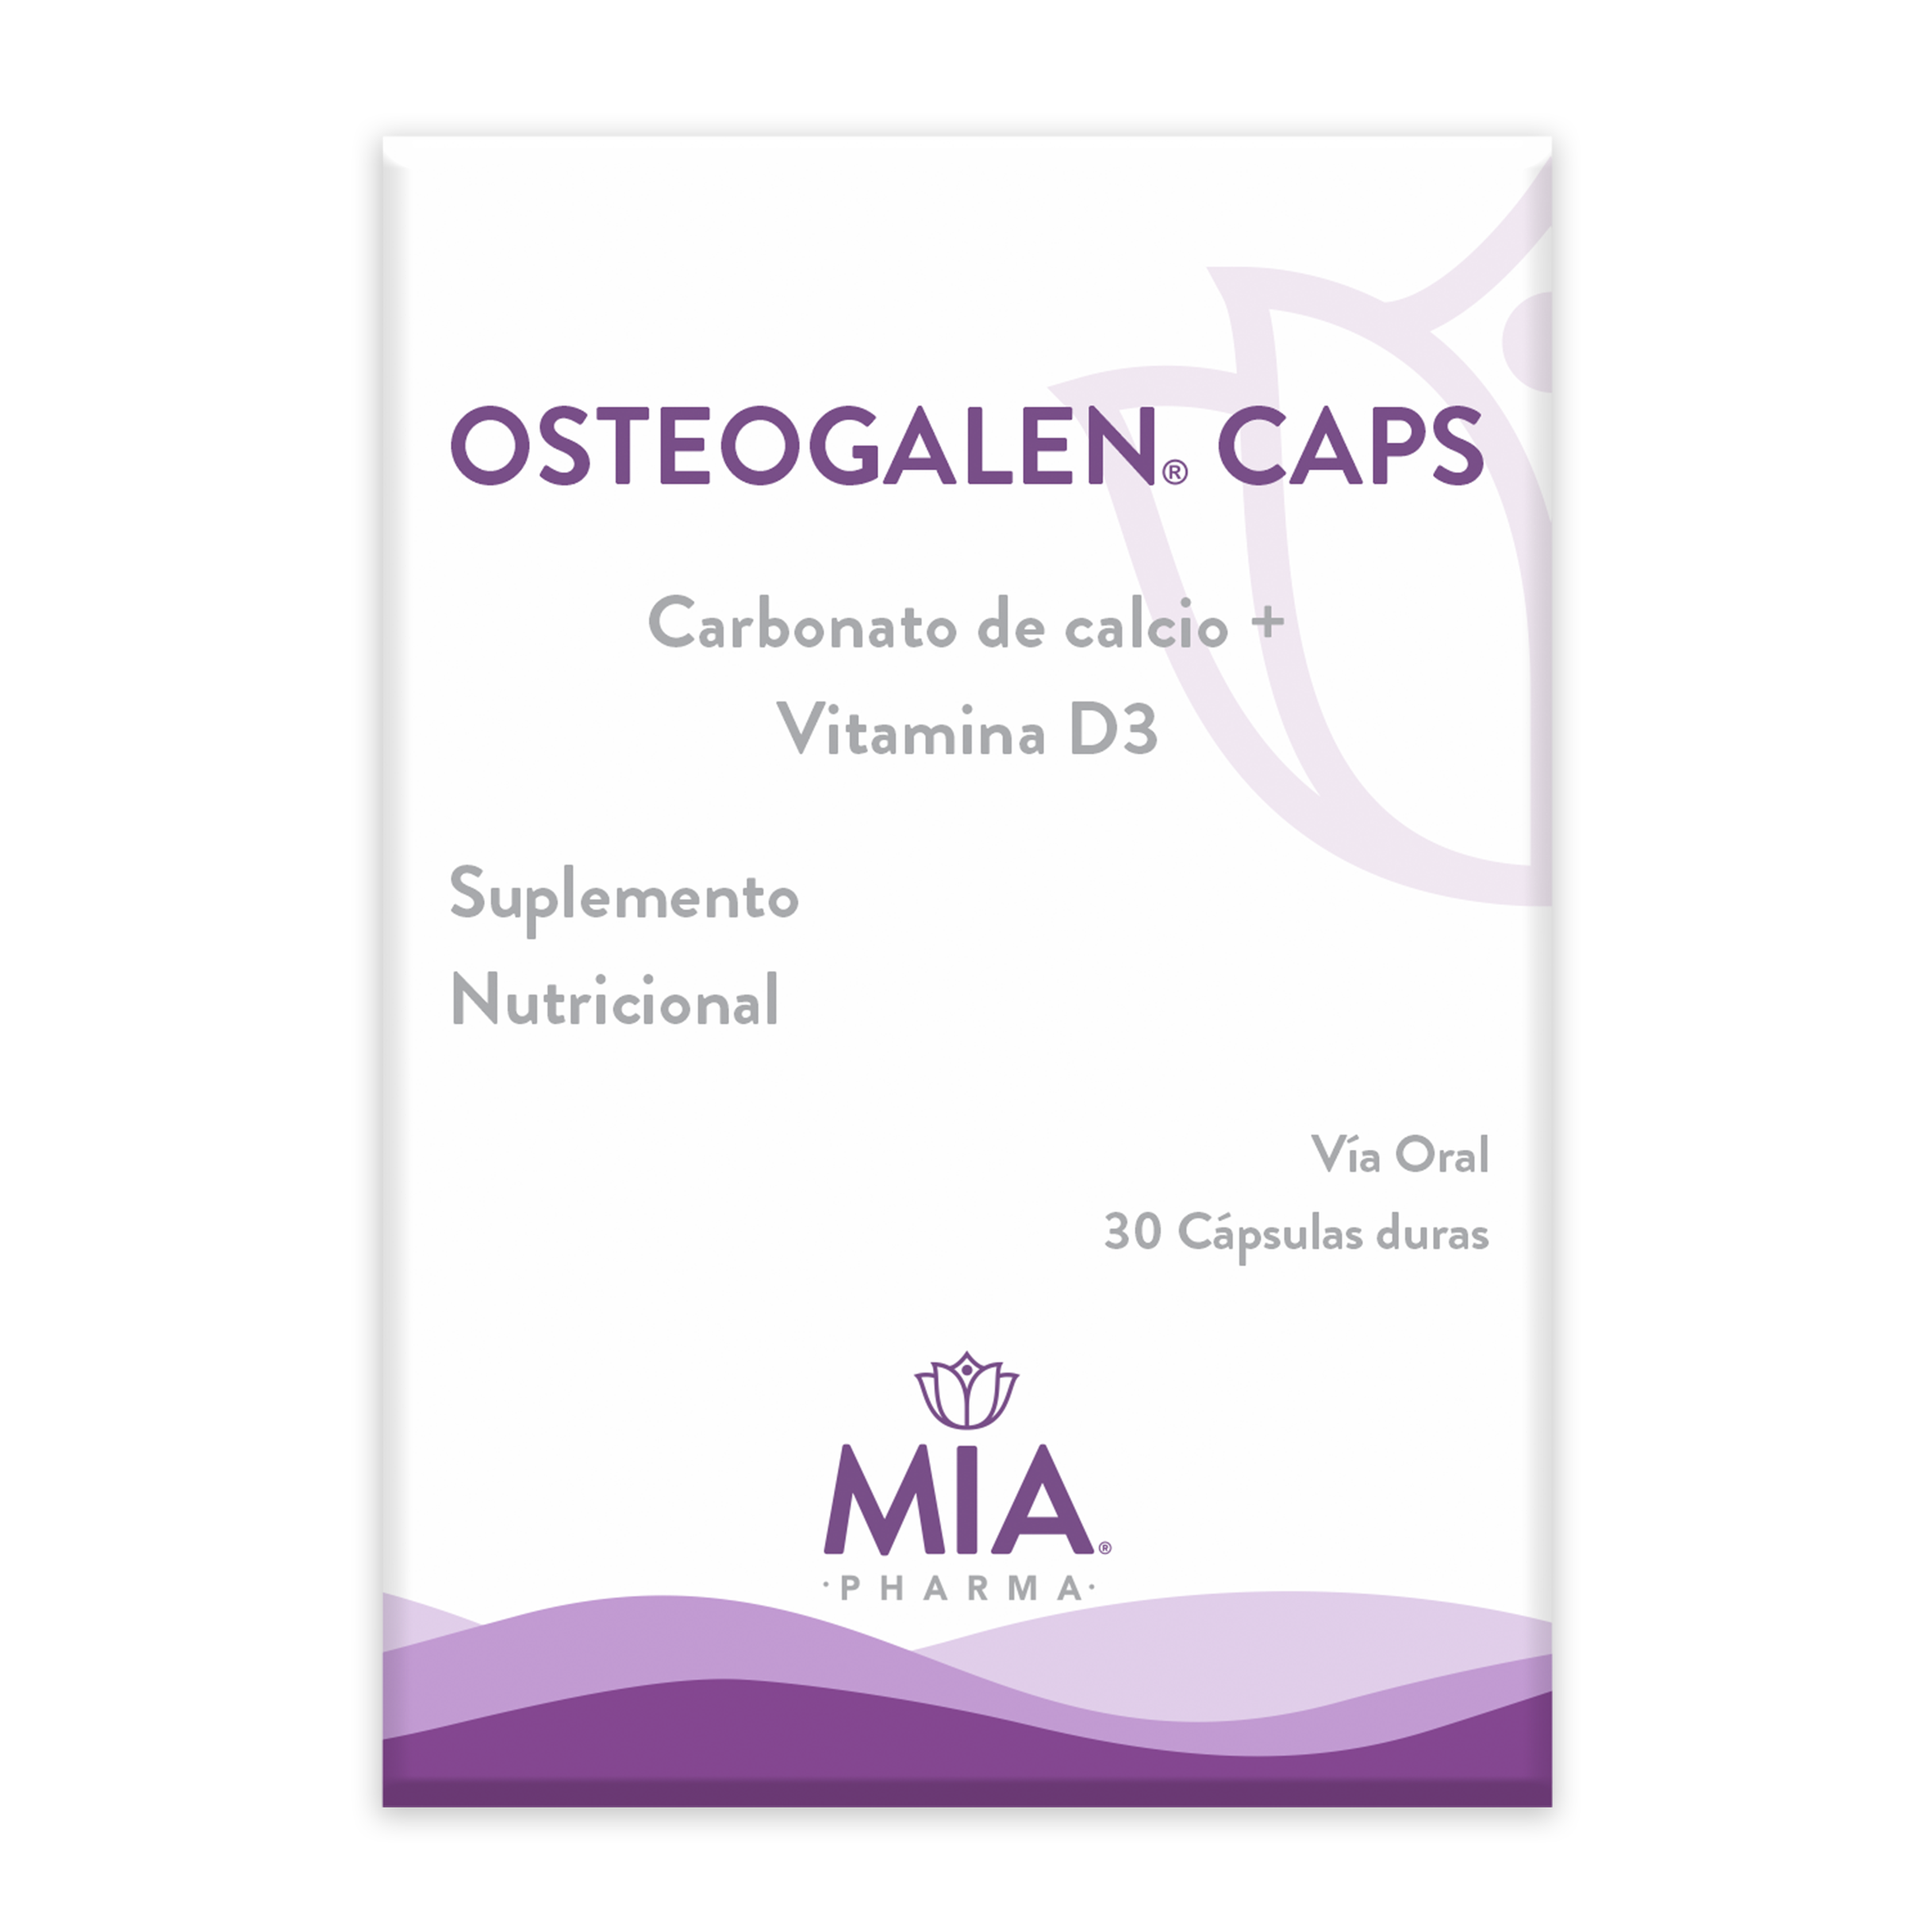 OSTEOGALEN CAPS